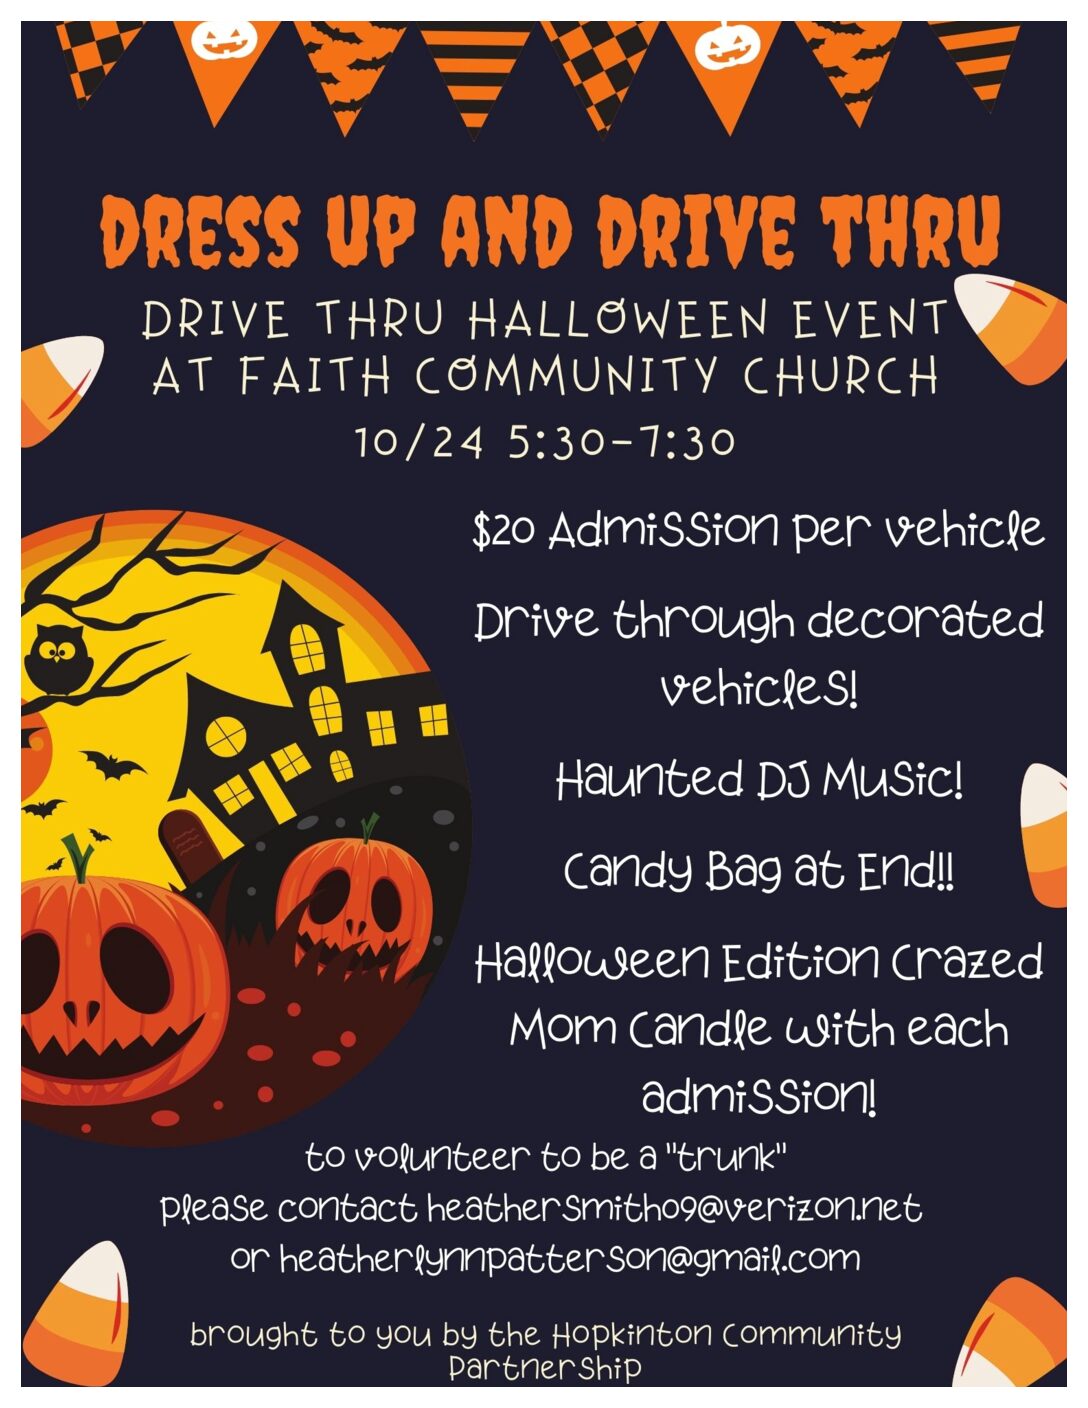 Dress Up and Drive Thru Halloween event at Faith Community Church Oct. 24